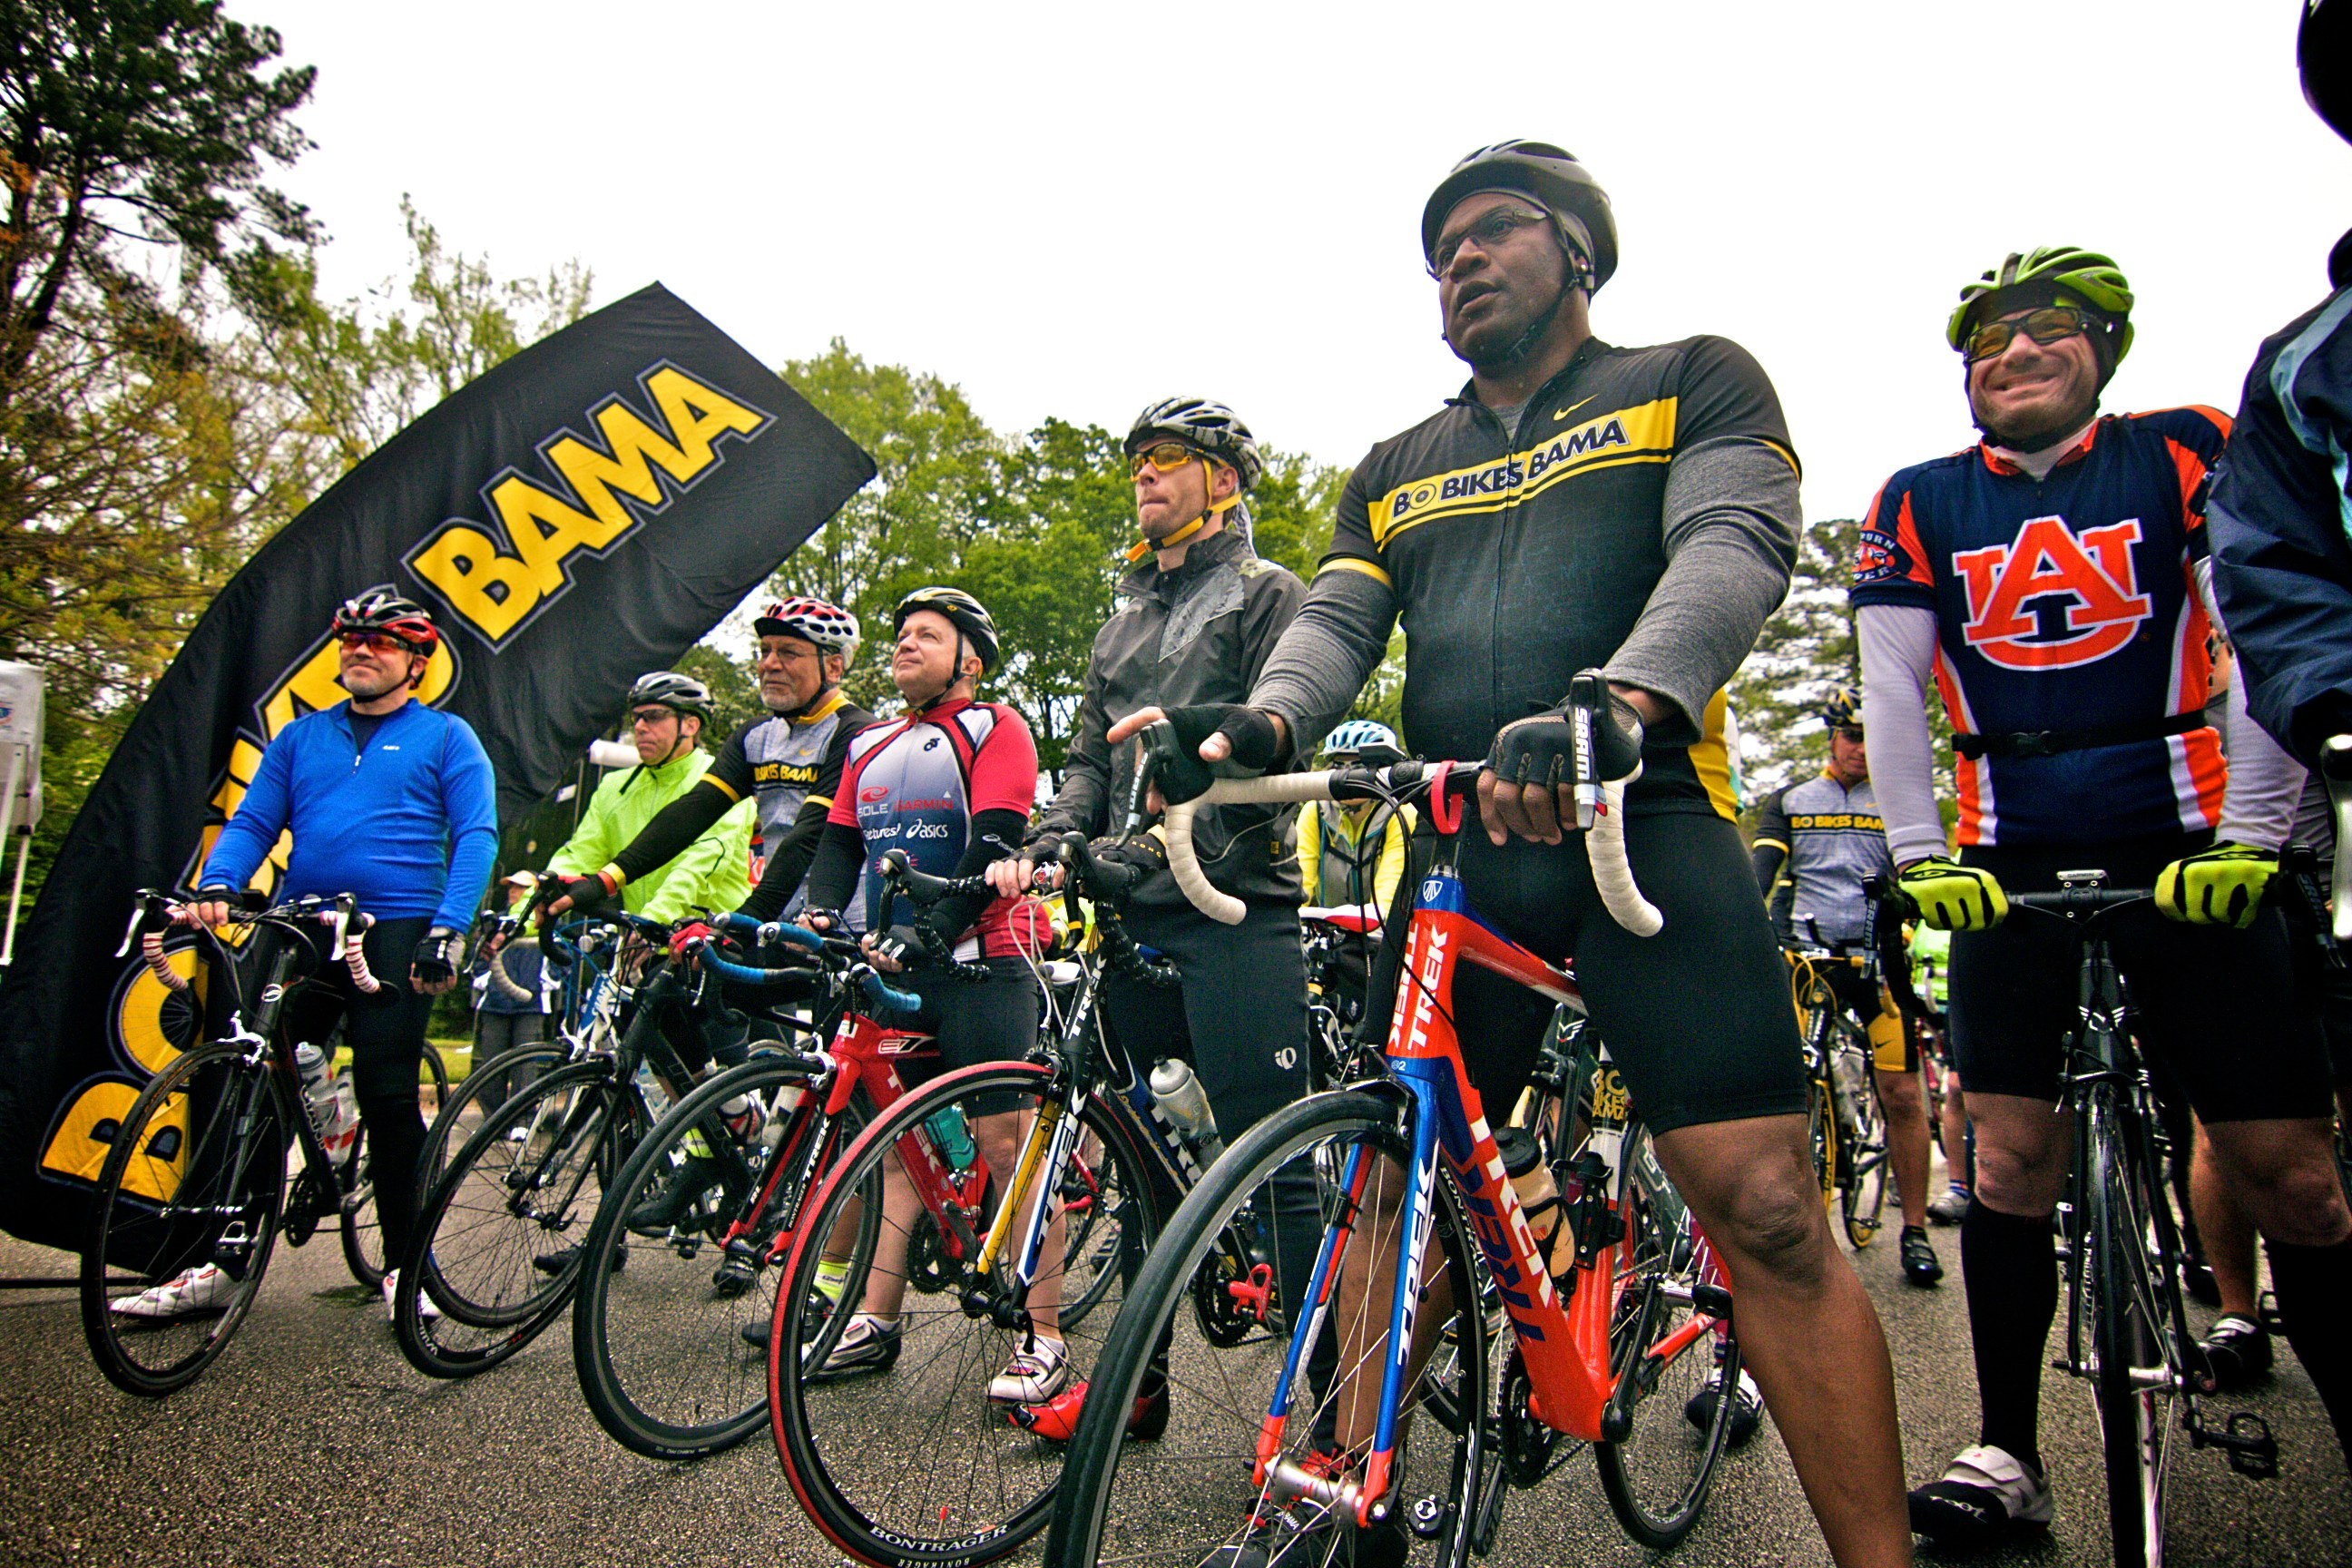 Bo Jackson at the Bo Bikes Bama start line